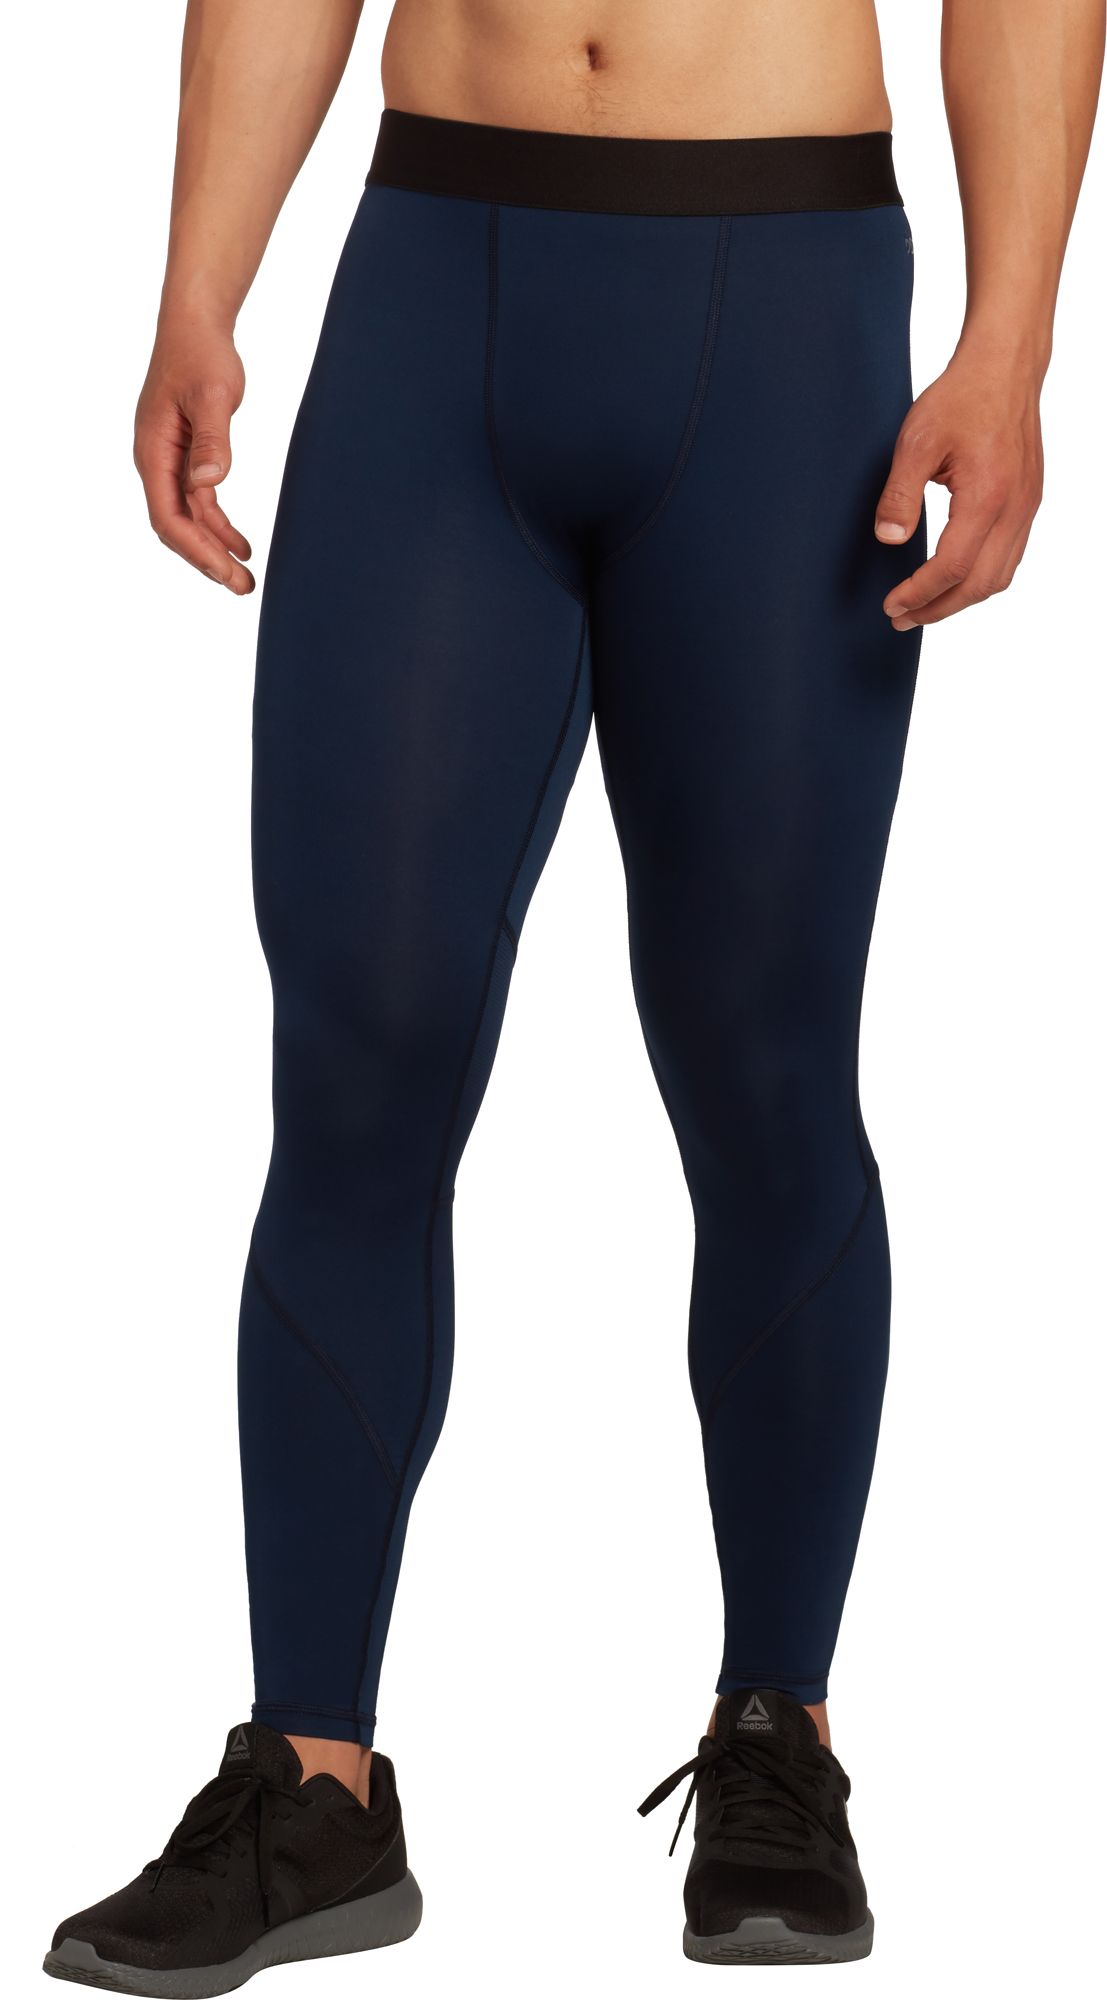 navy blue nike compression pants